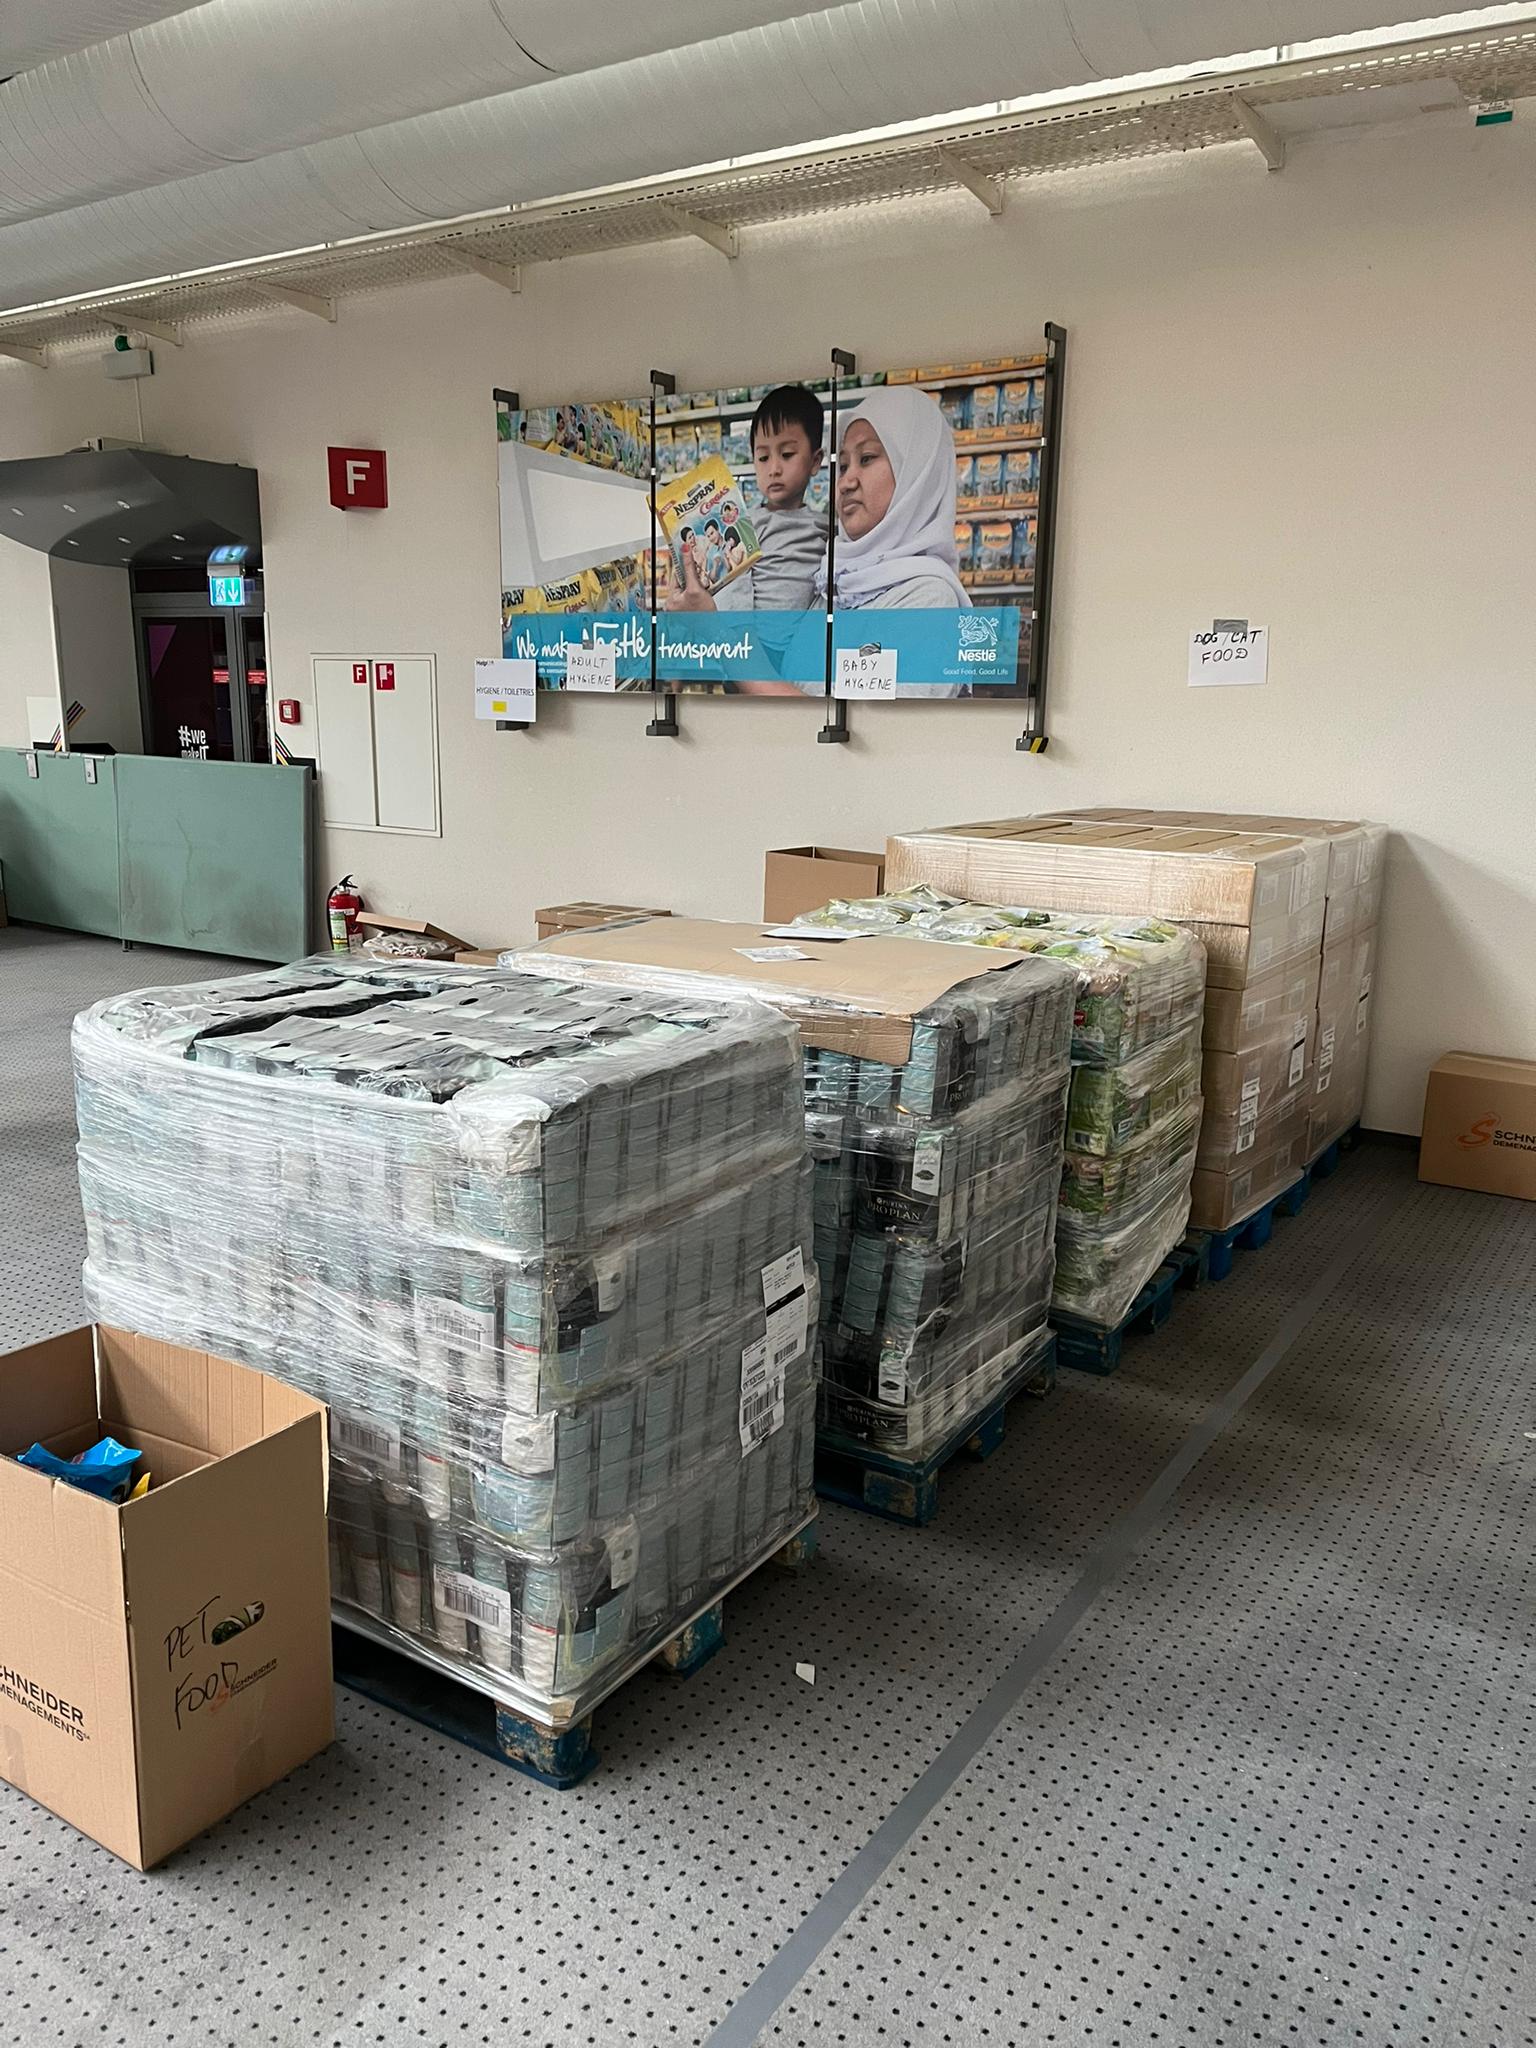 Nestle Purina team volunteered in HelpUA warehouse, additionally donating 5 pallets of petfood